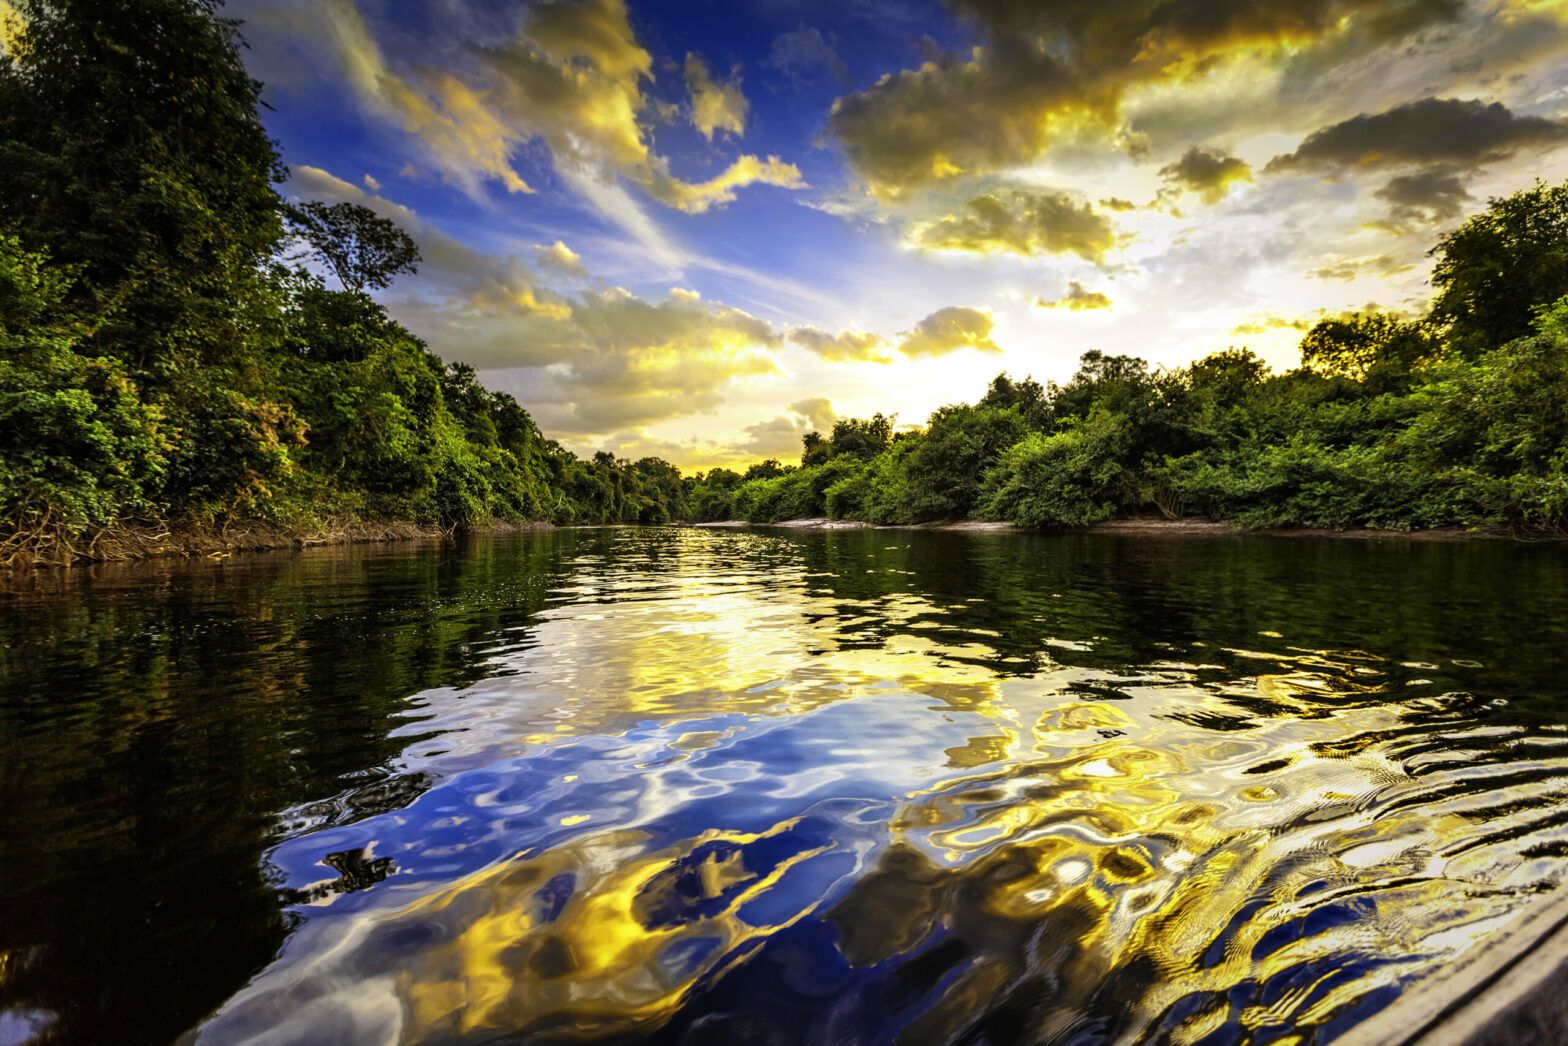 The Amazon’s biodiversity: The real winning lottery ticket